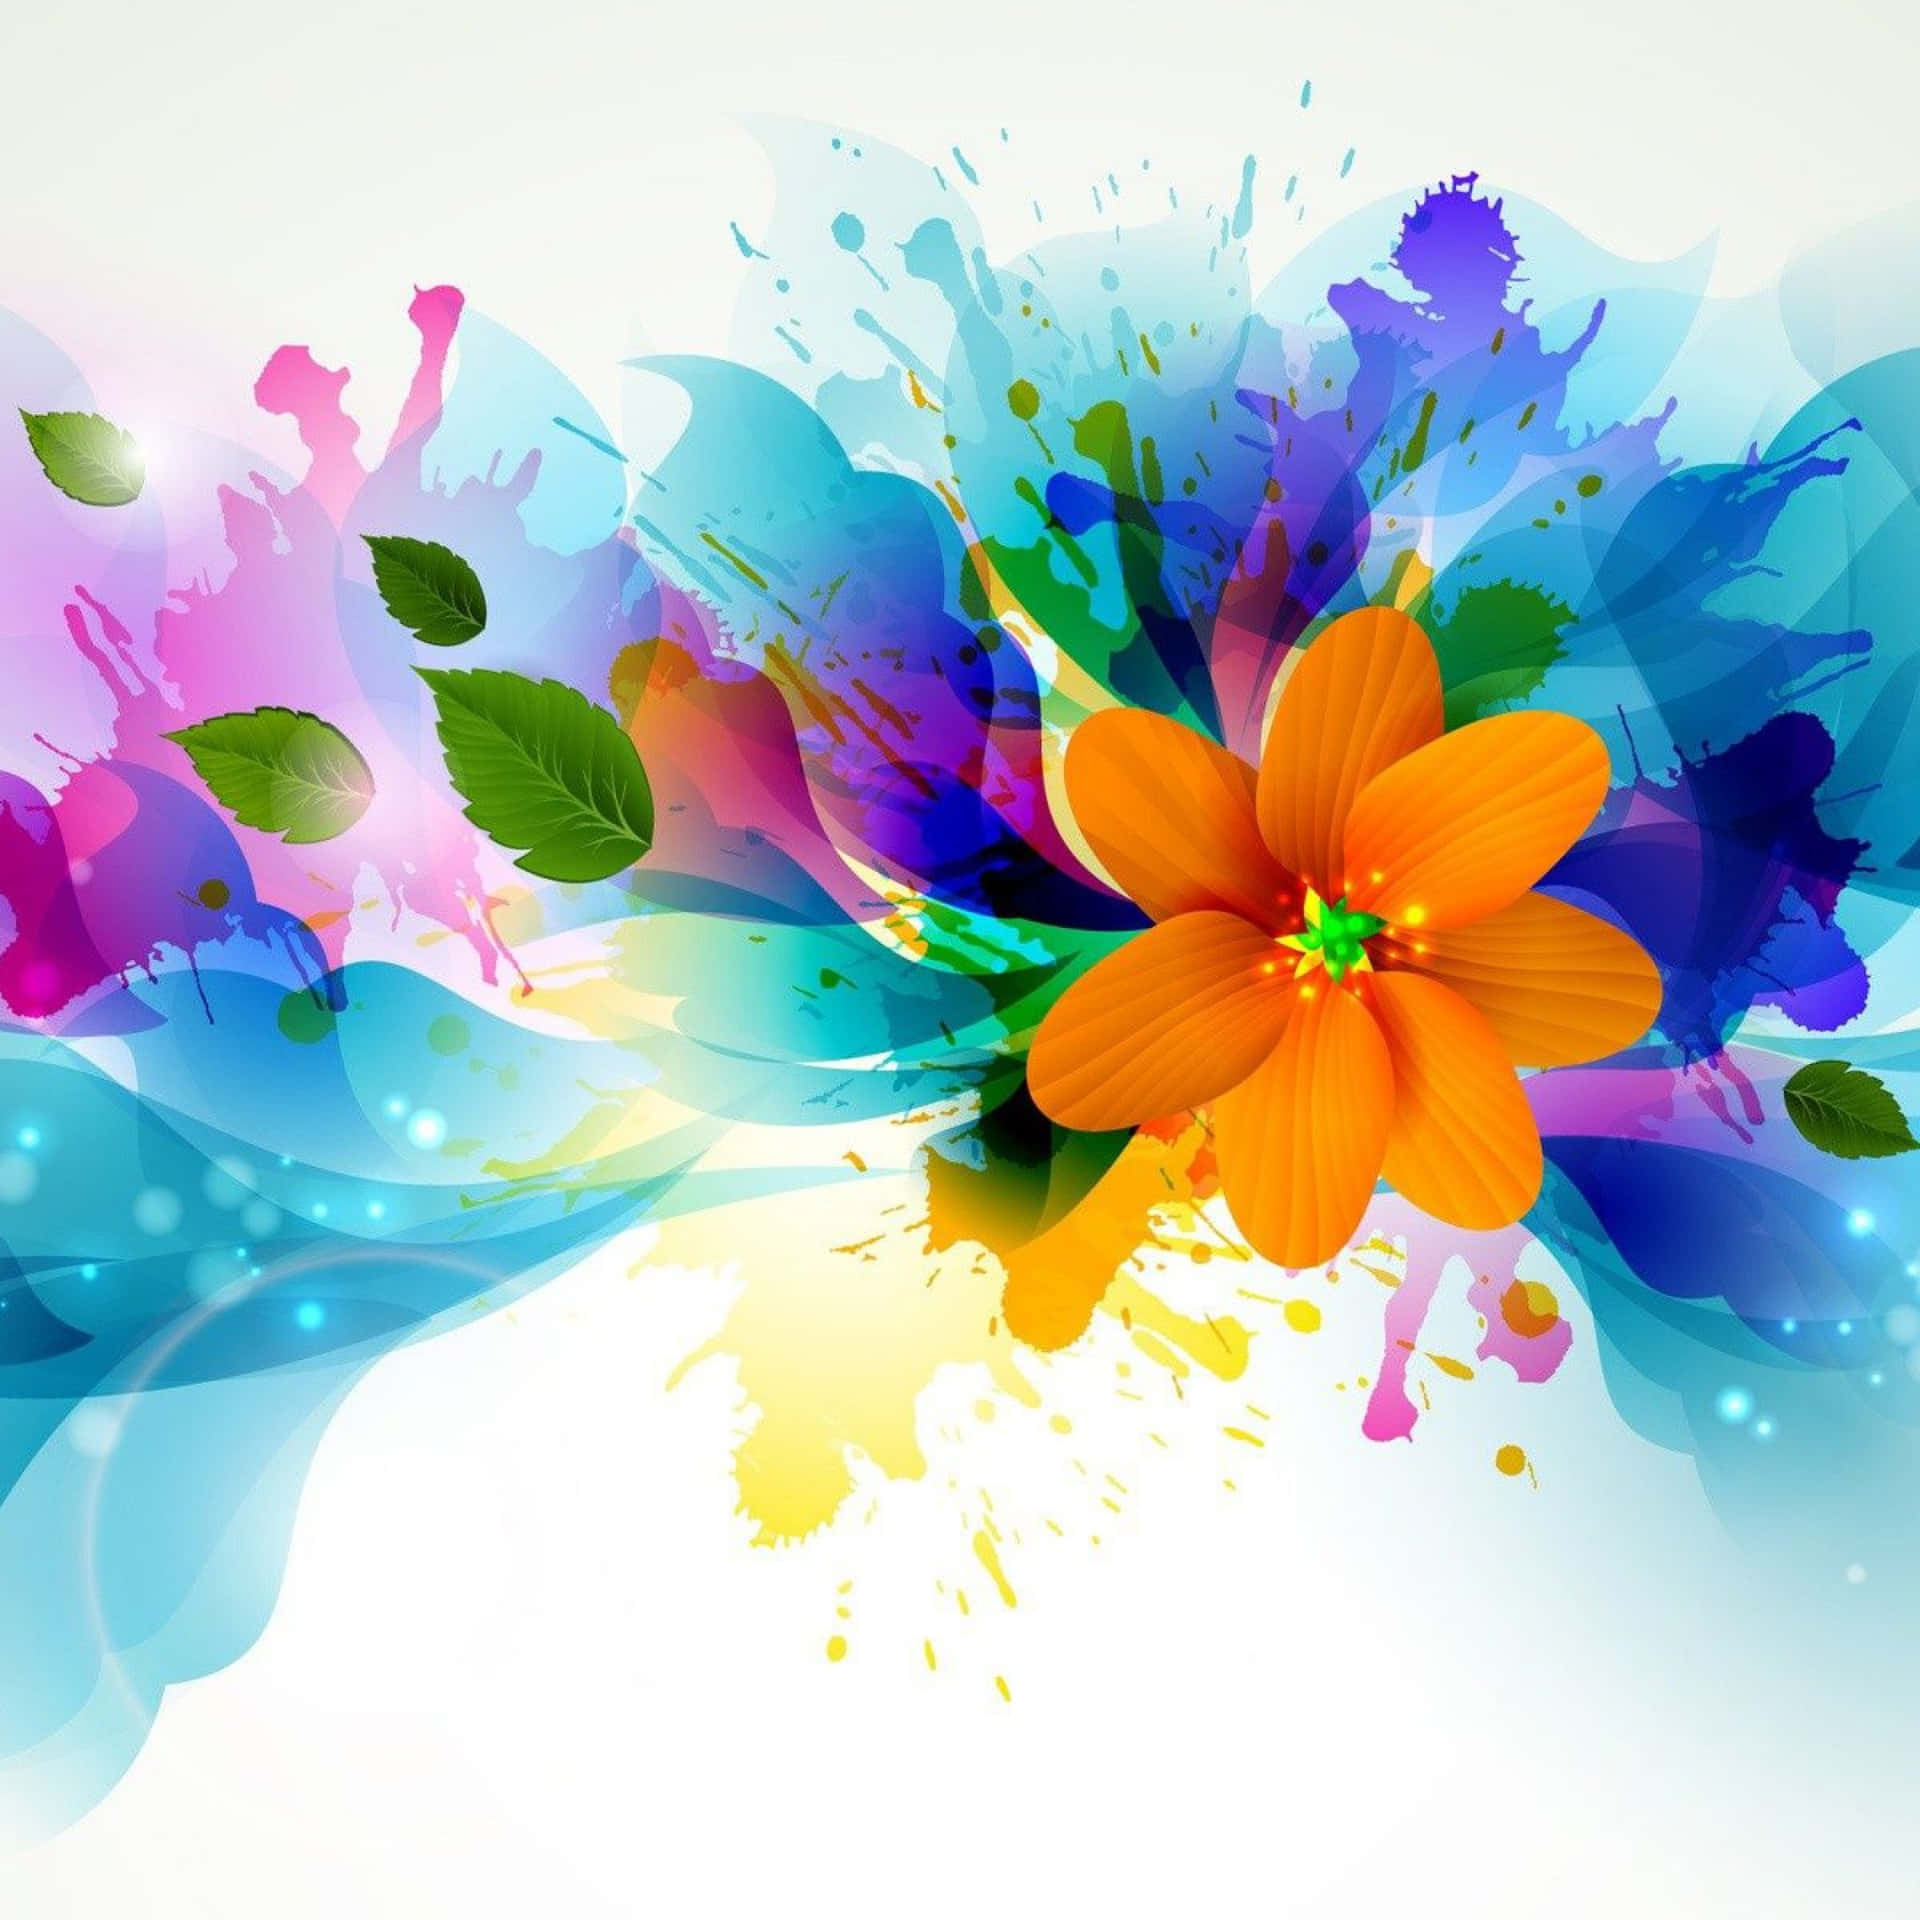 Stunning Floral Art Display in Pastel Colors Wallpaper